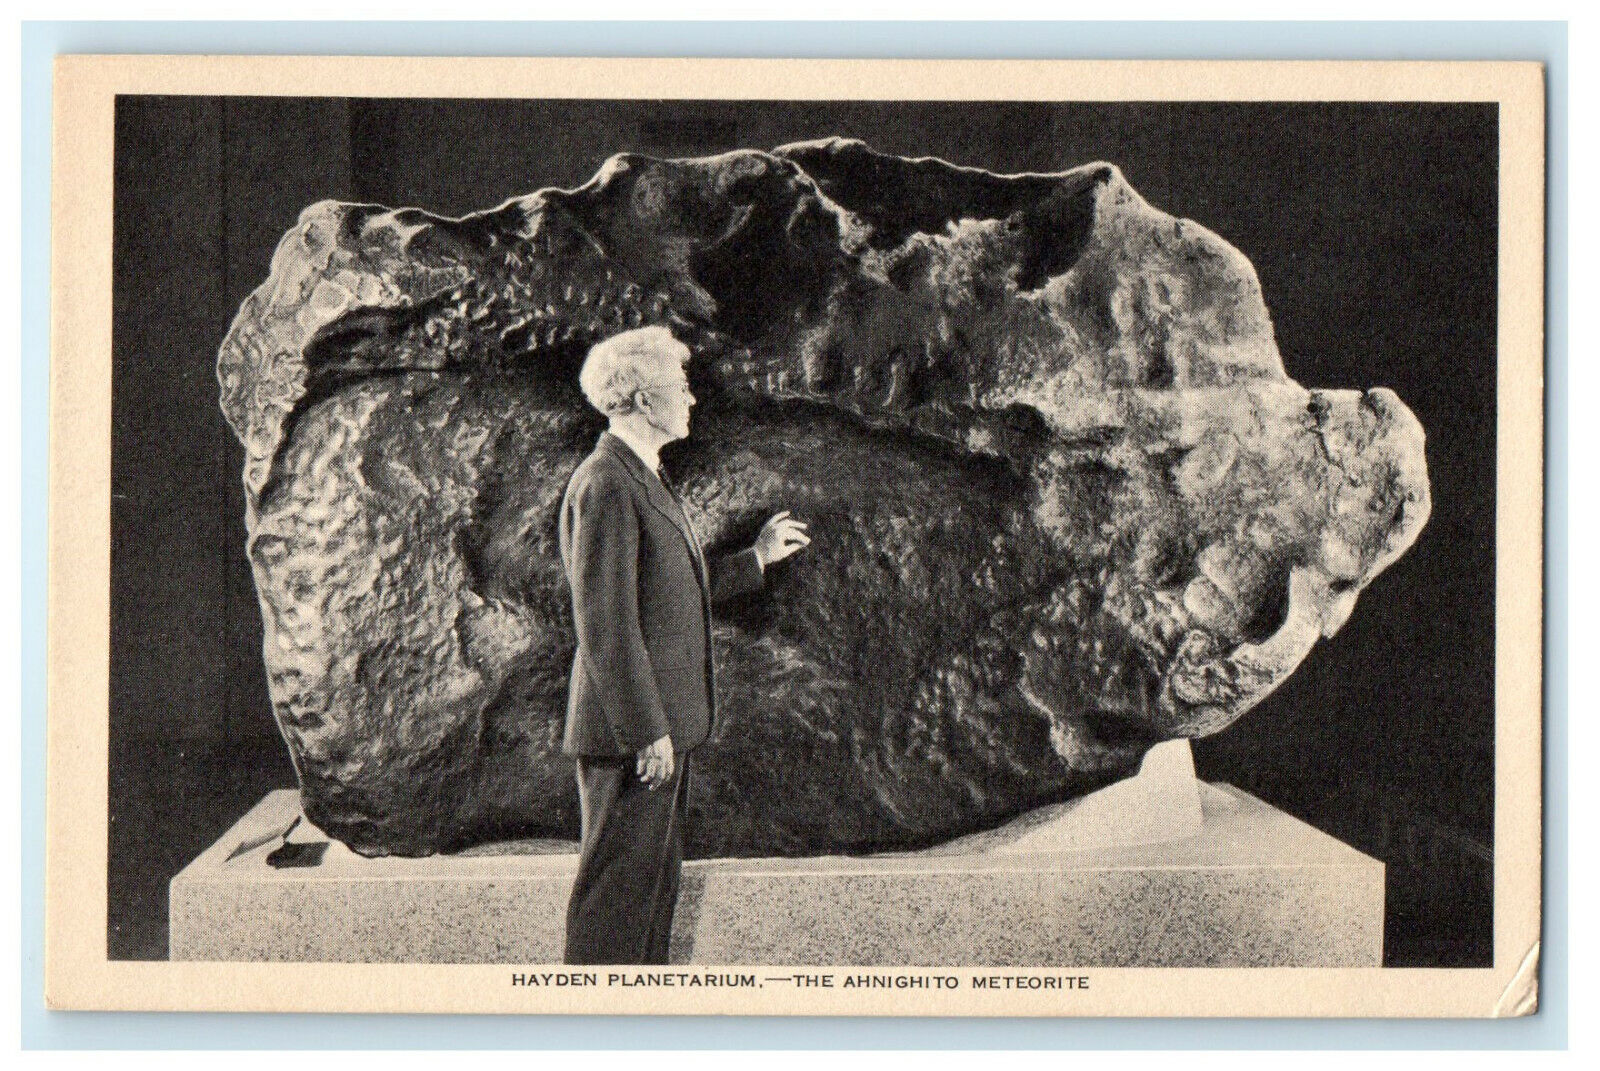 c1940s Hayden Planetarium - The Ahnighito Meteorite, New York NY Postcard